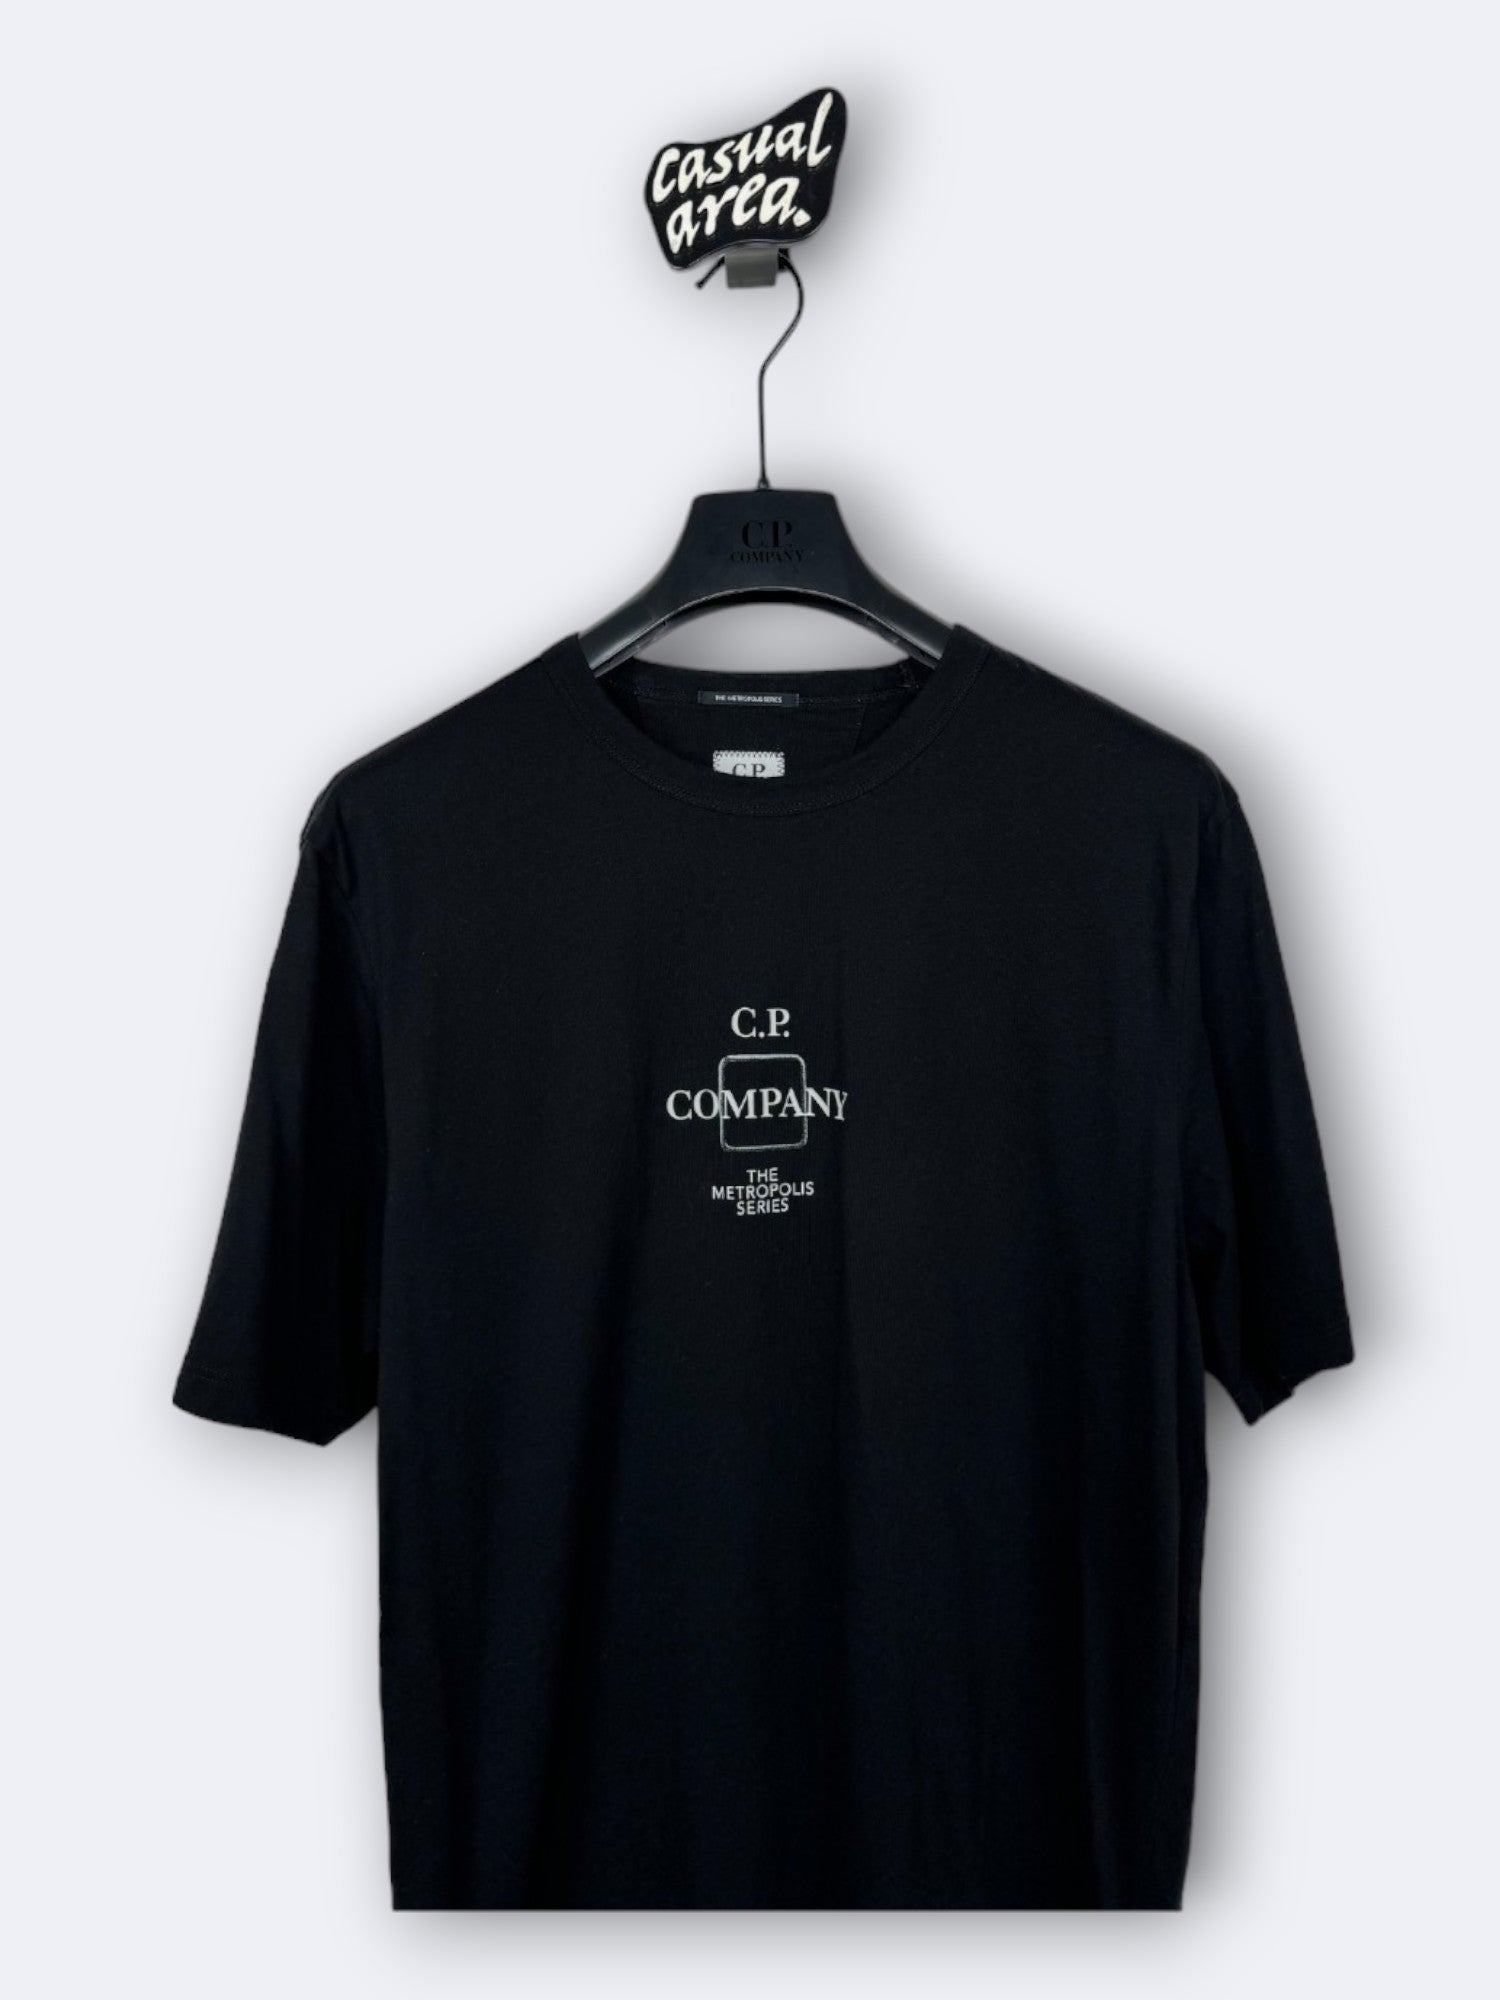 Tee-shirt C.P. Company "The Metropolis Series" - L Casual Area